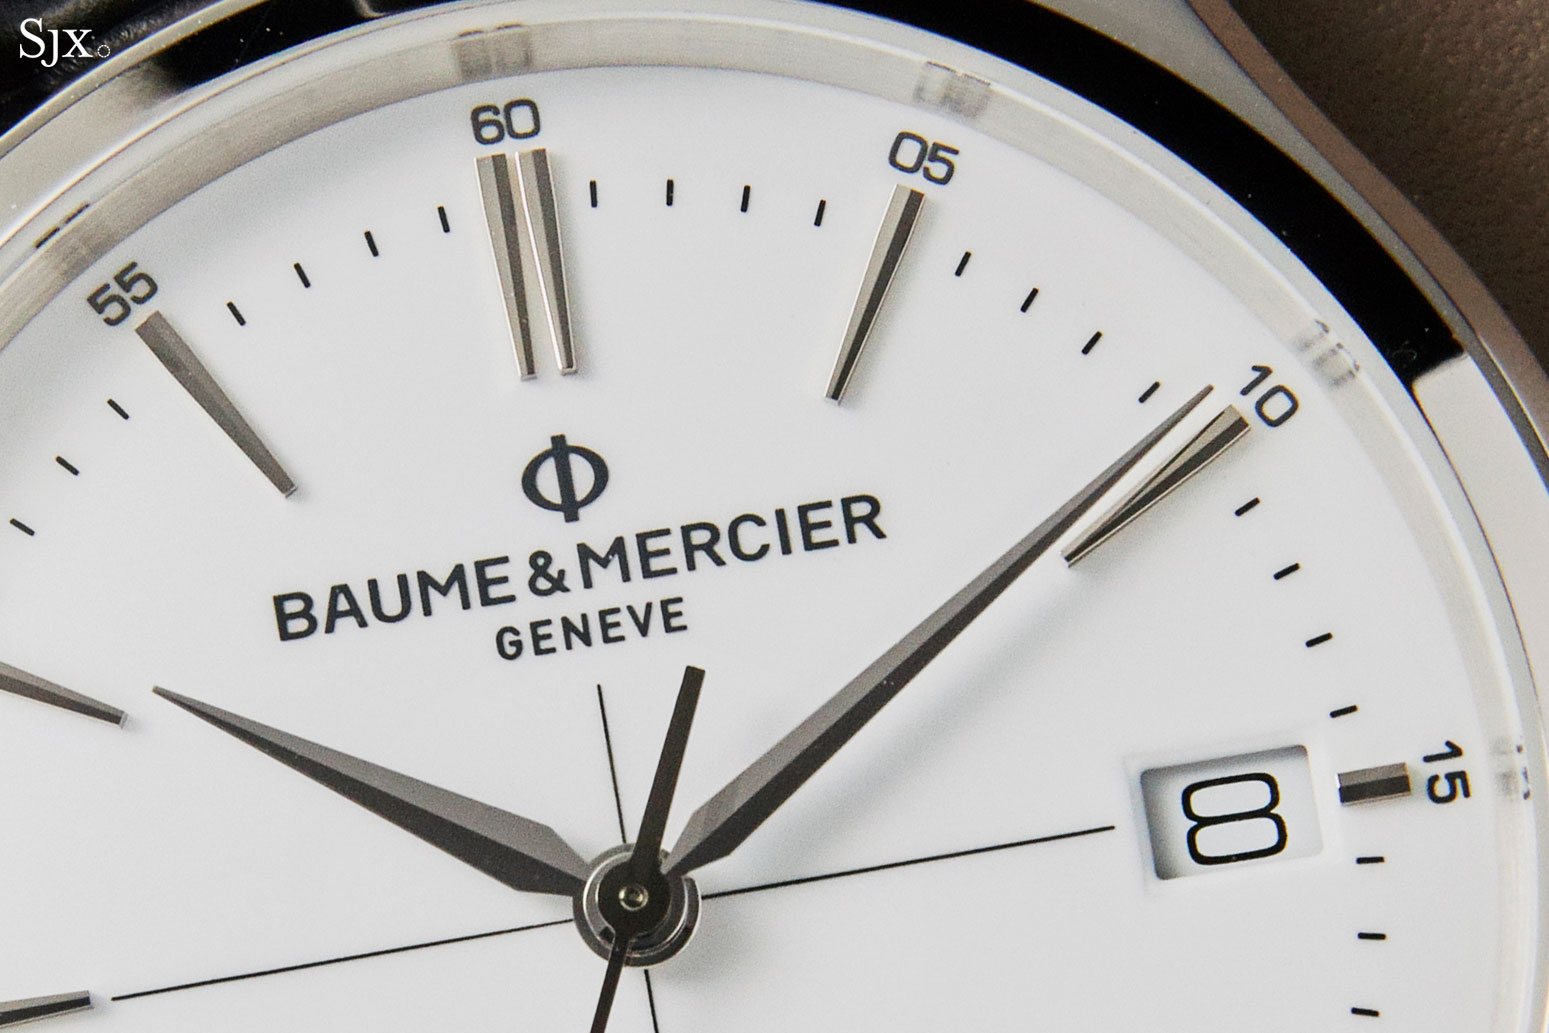 Baume Mercier Baume & Mercier Baumatic COSC chronometer 1